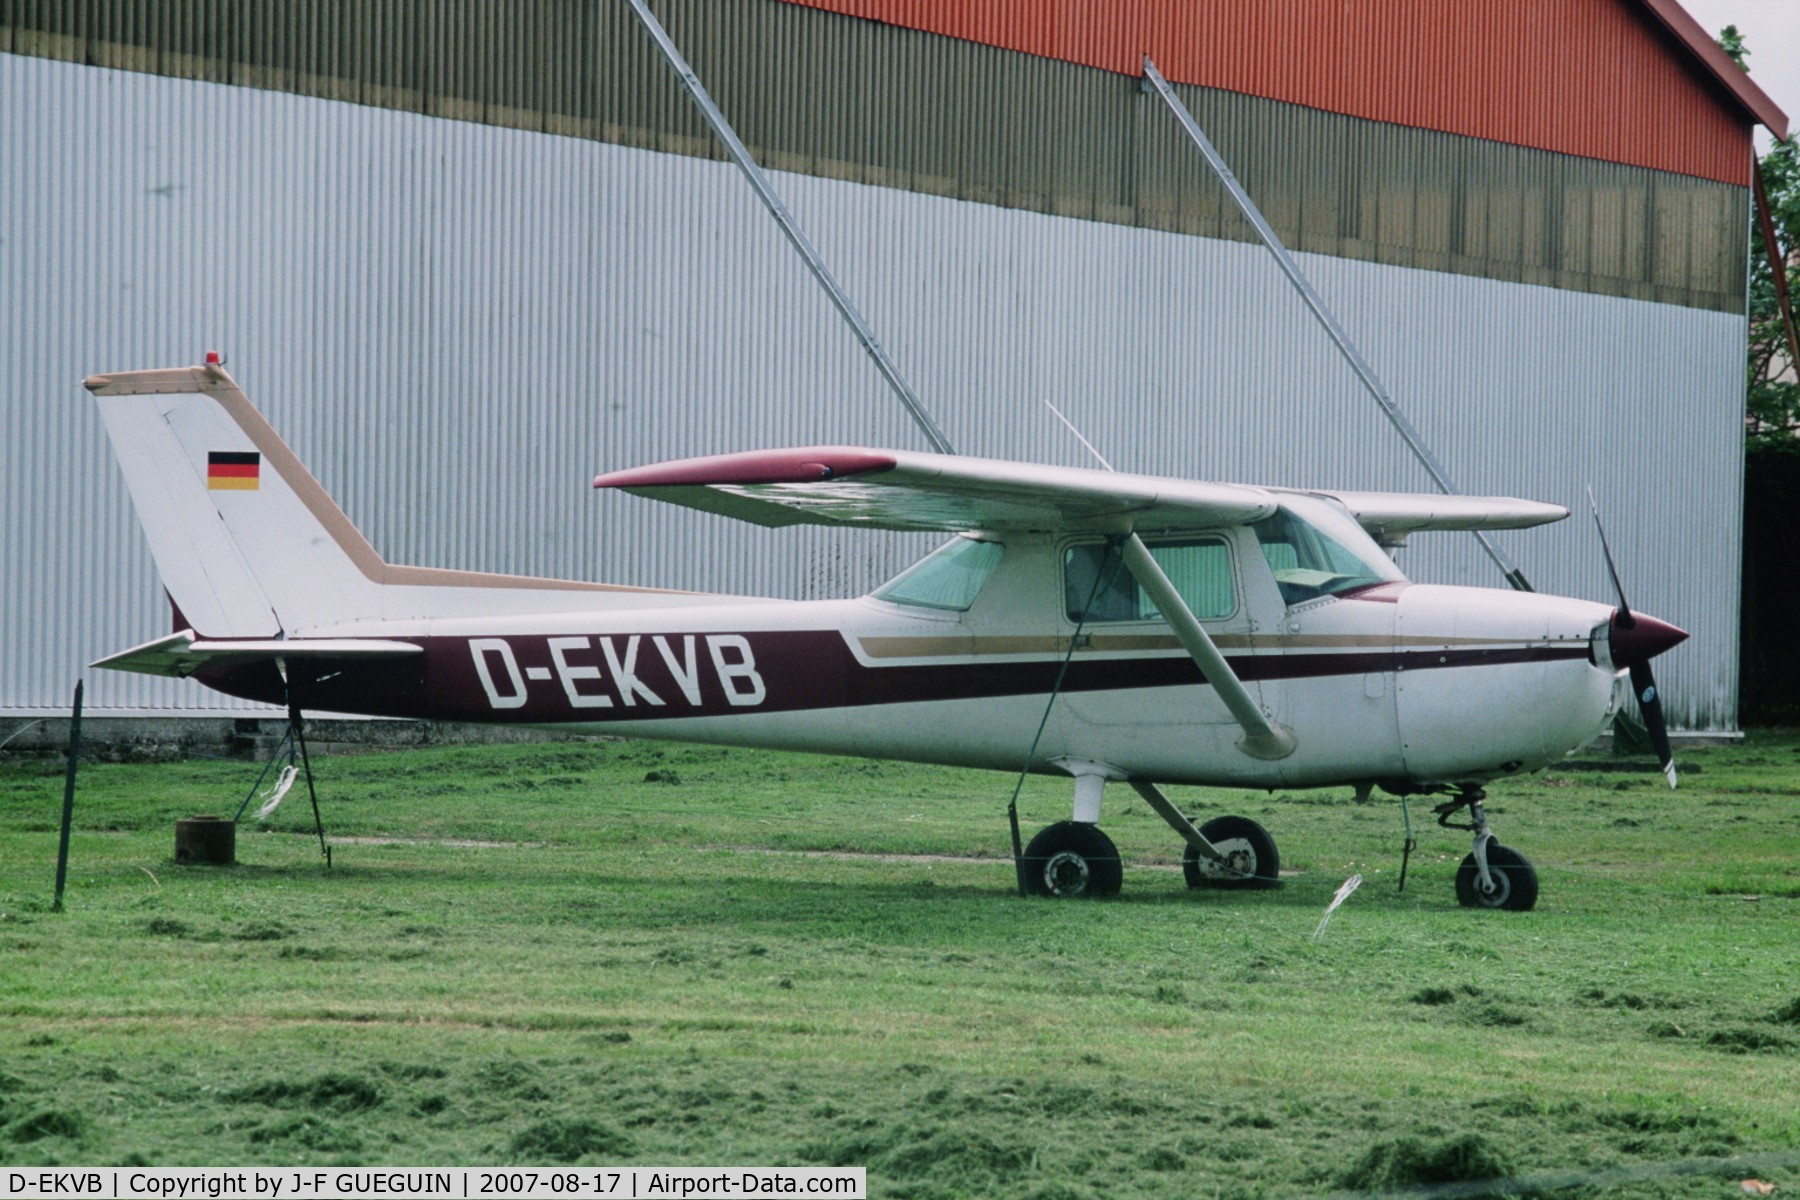 D-EKVB, Cessna 150L C/N 15073720, Already parked in the grass at Paris/Toussus-le-Noble airport.